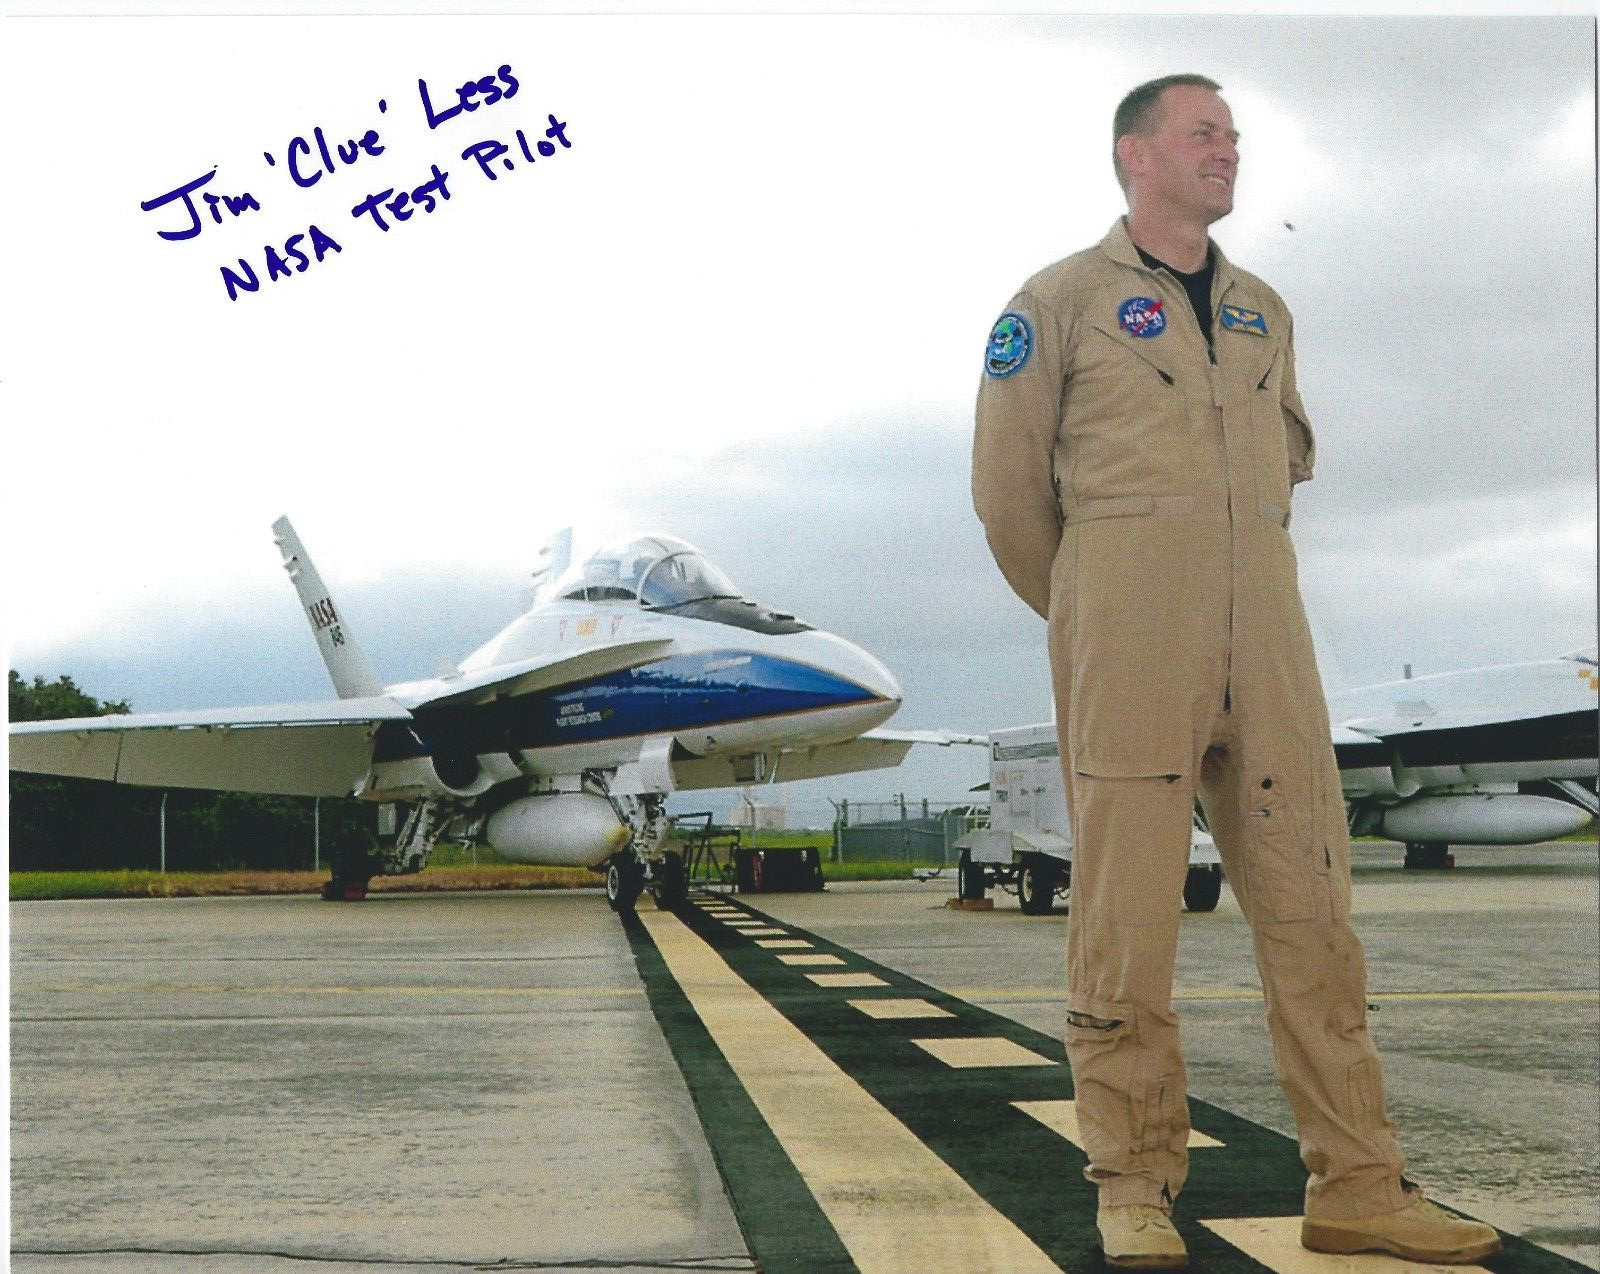 JAMES Jim LESS Test Research Pilot NASA Signed 8 x 10 Photo 